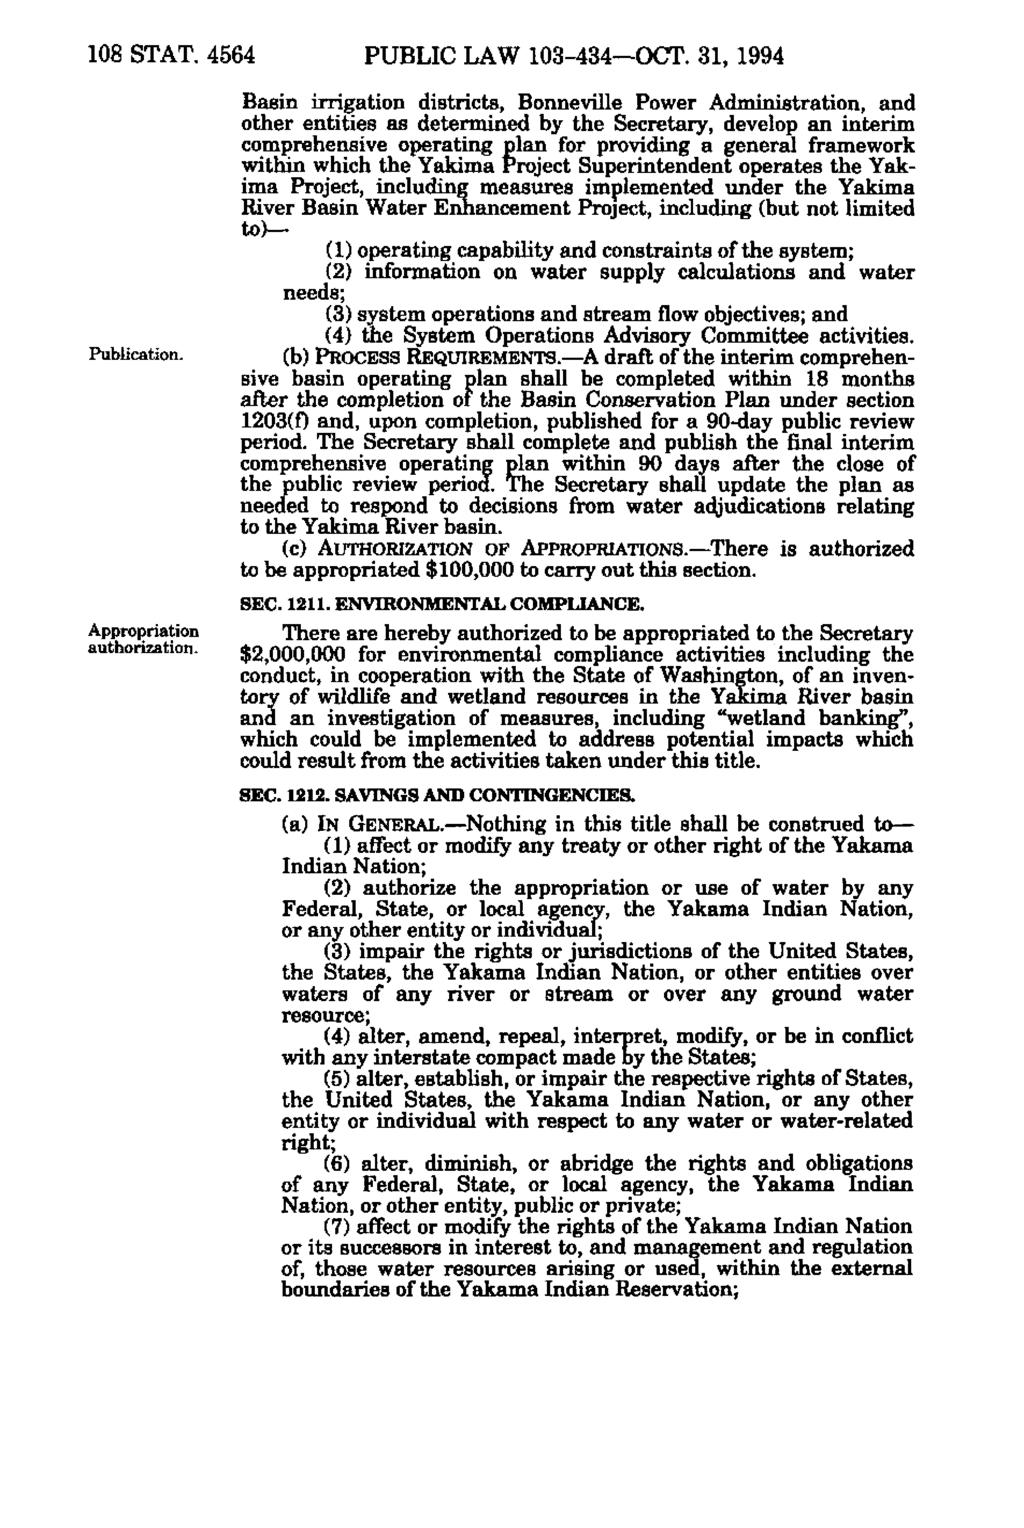 108 STAT. 4564 PUBLIC LAW 103-434 OCT. 31, 1994 Publication. Appropriation authorization.